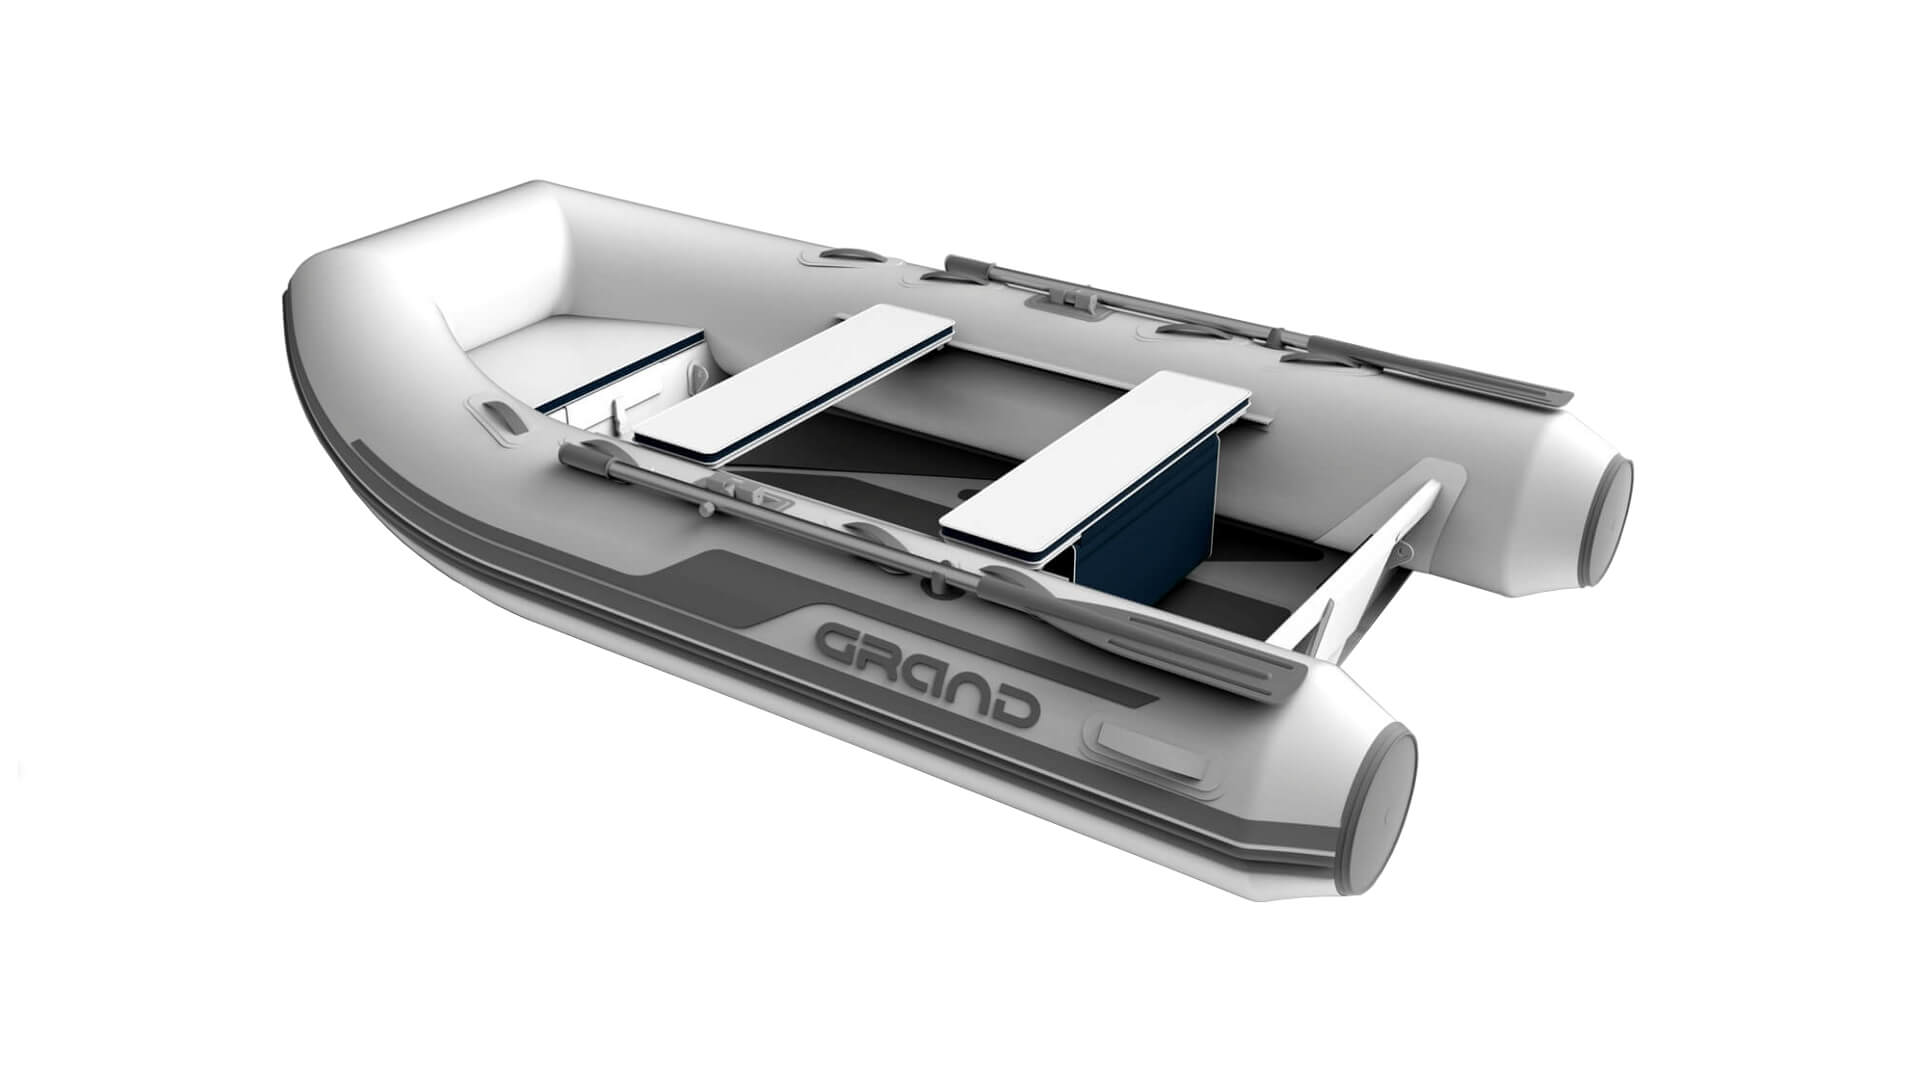 Надувная лодка с жестким алюминиевым дном GRAND Aluminum Line Alu330D, Надувная лодка GRAND Aluminum Line Alu330D, GRAND Aluminum Line Alu330D, GRAND Alu330D, GRAND Alu330D, Надувная лодка GRAND, Надувная лодка ГРАНД, Надувная лодка с жестким дном, RIB, Rigid Inflatable Boats